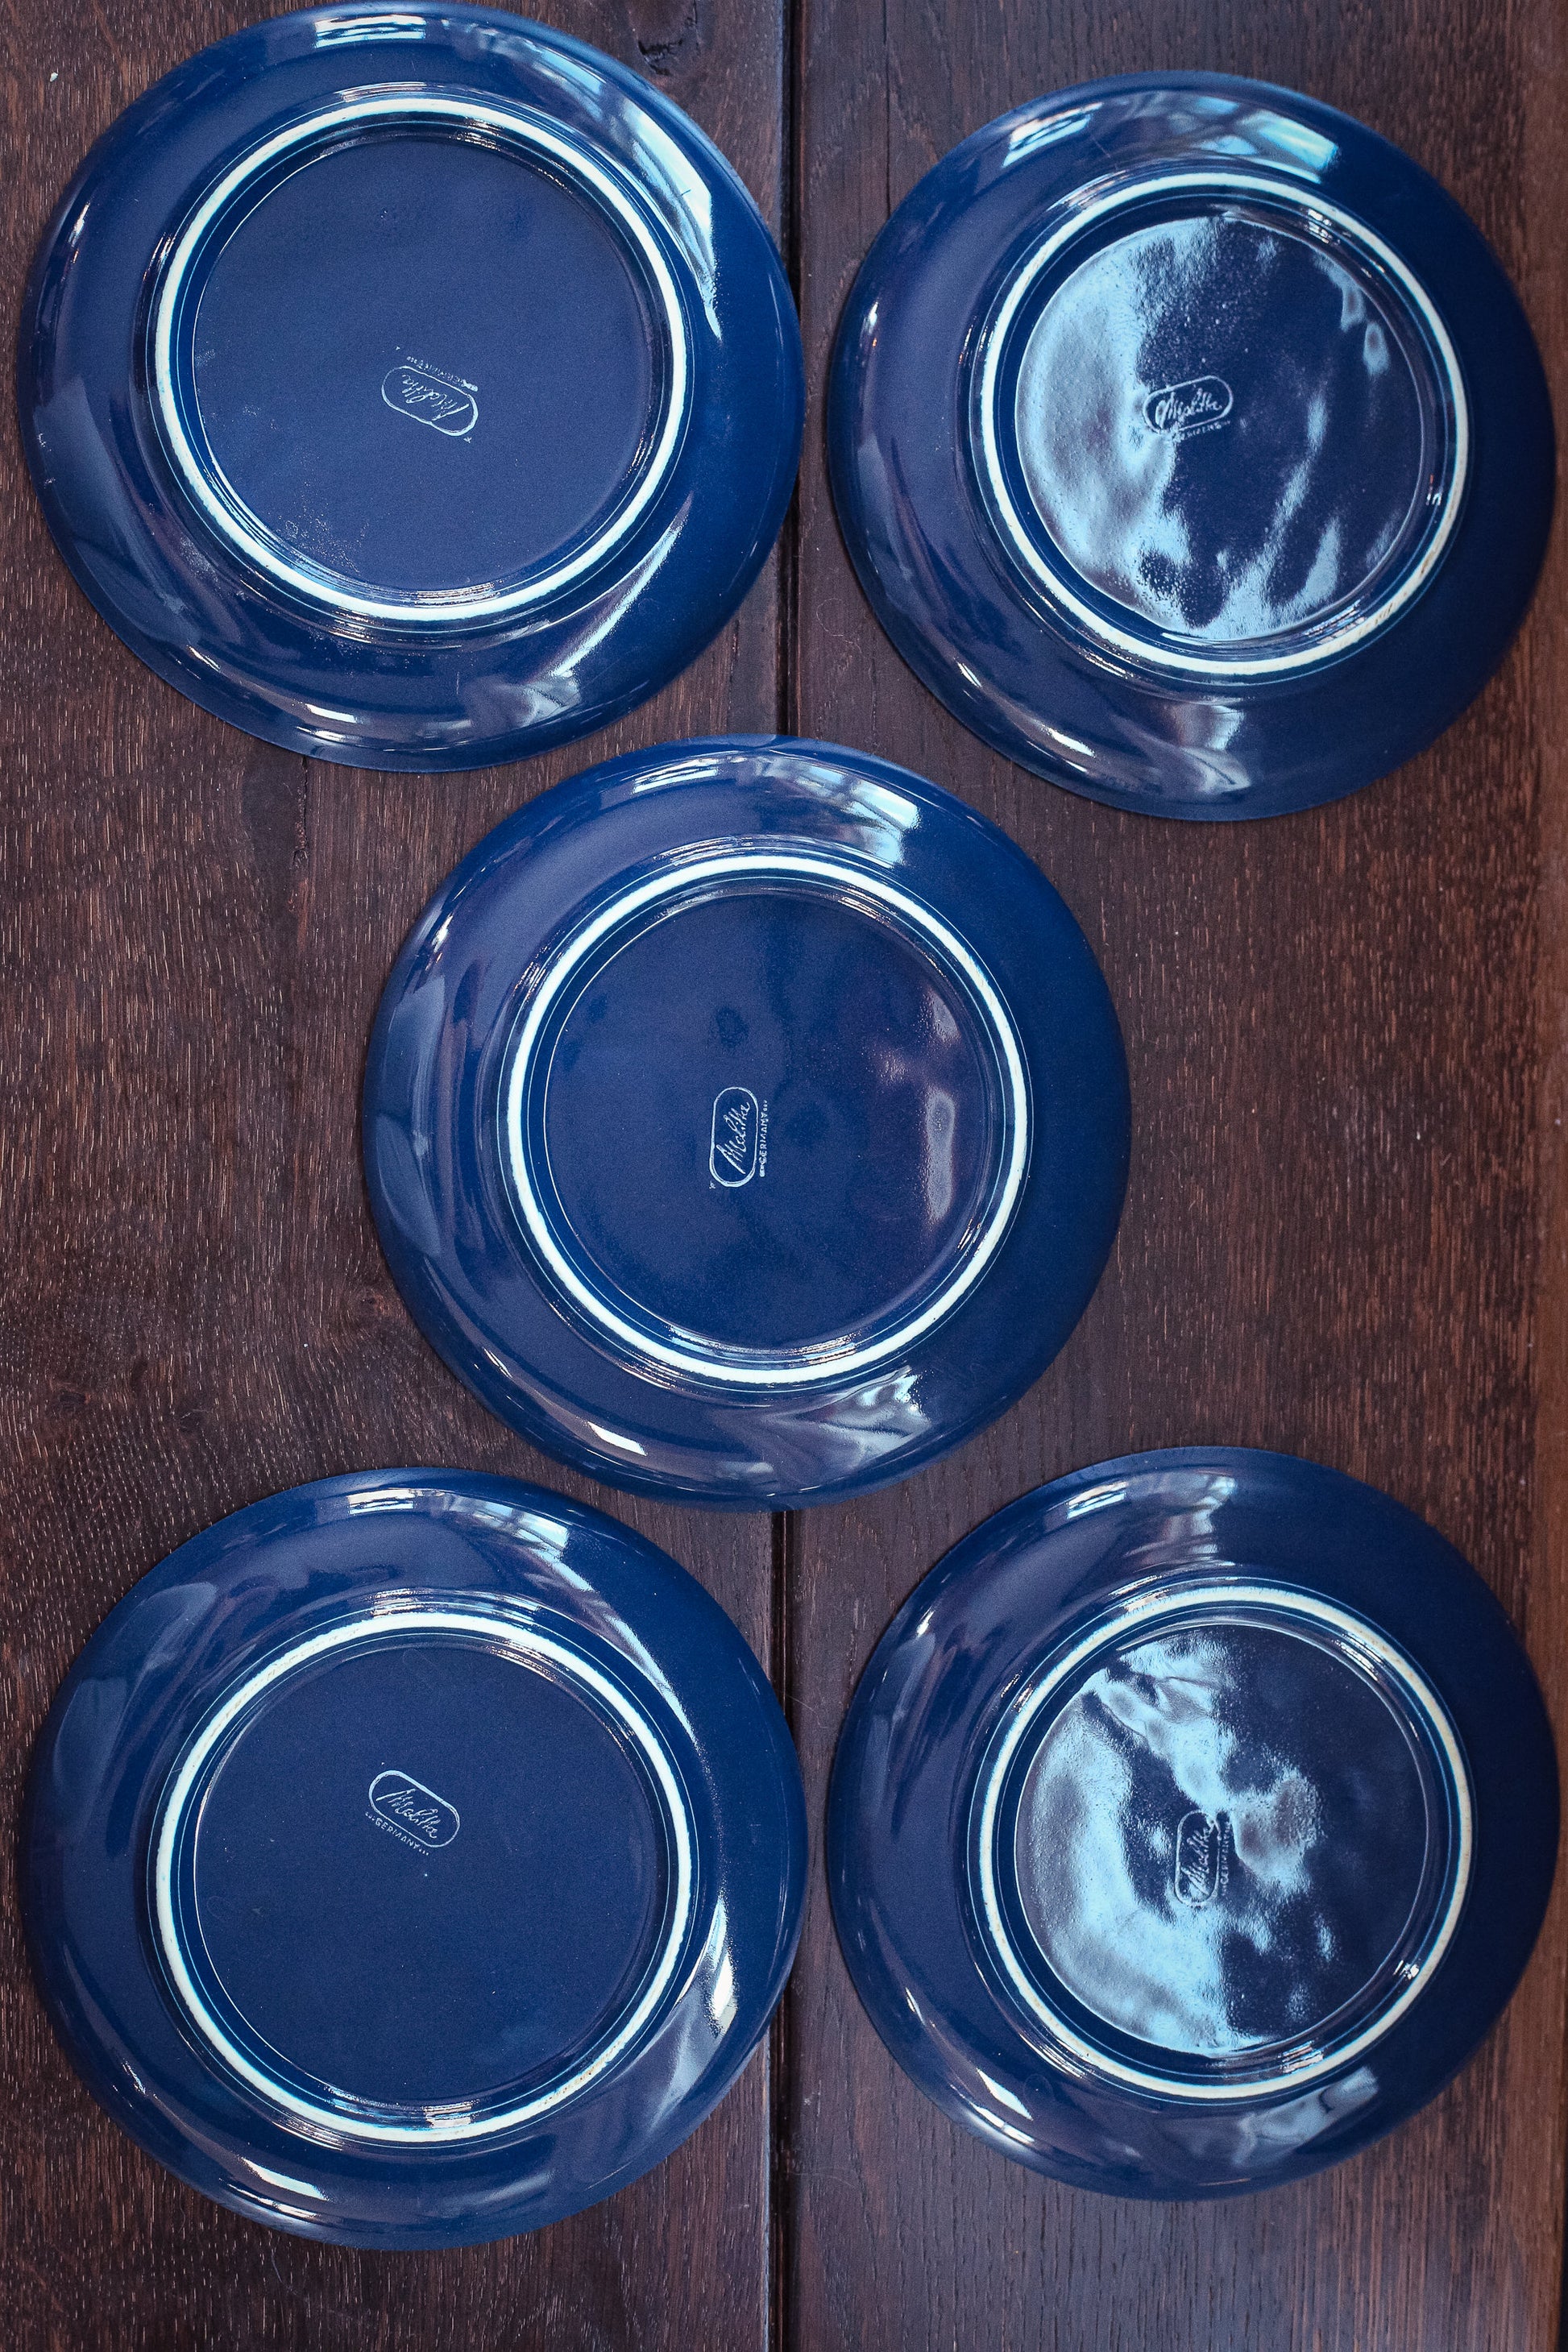 Melitta Stockholm Blue Soup Bowls & Plates - Vintage Swedish Midcentury Ceramic Tableware 10 Piece Set